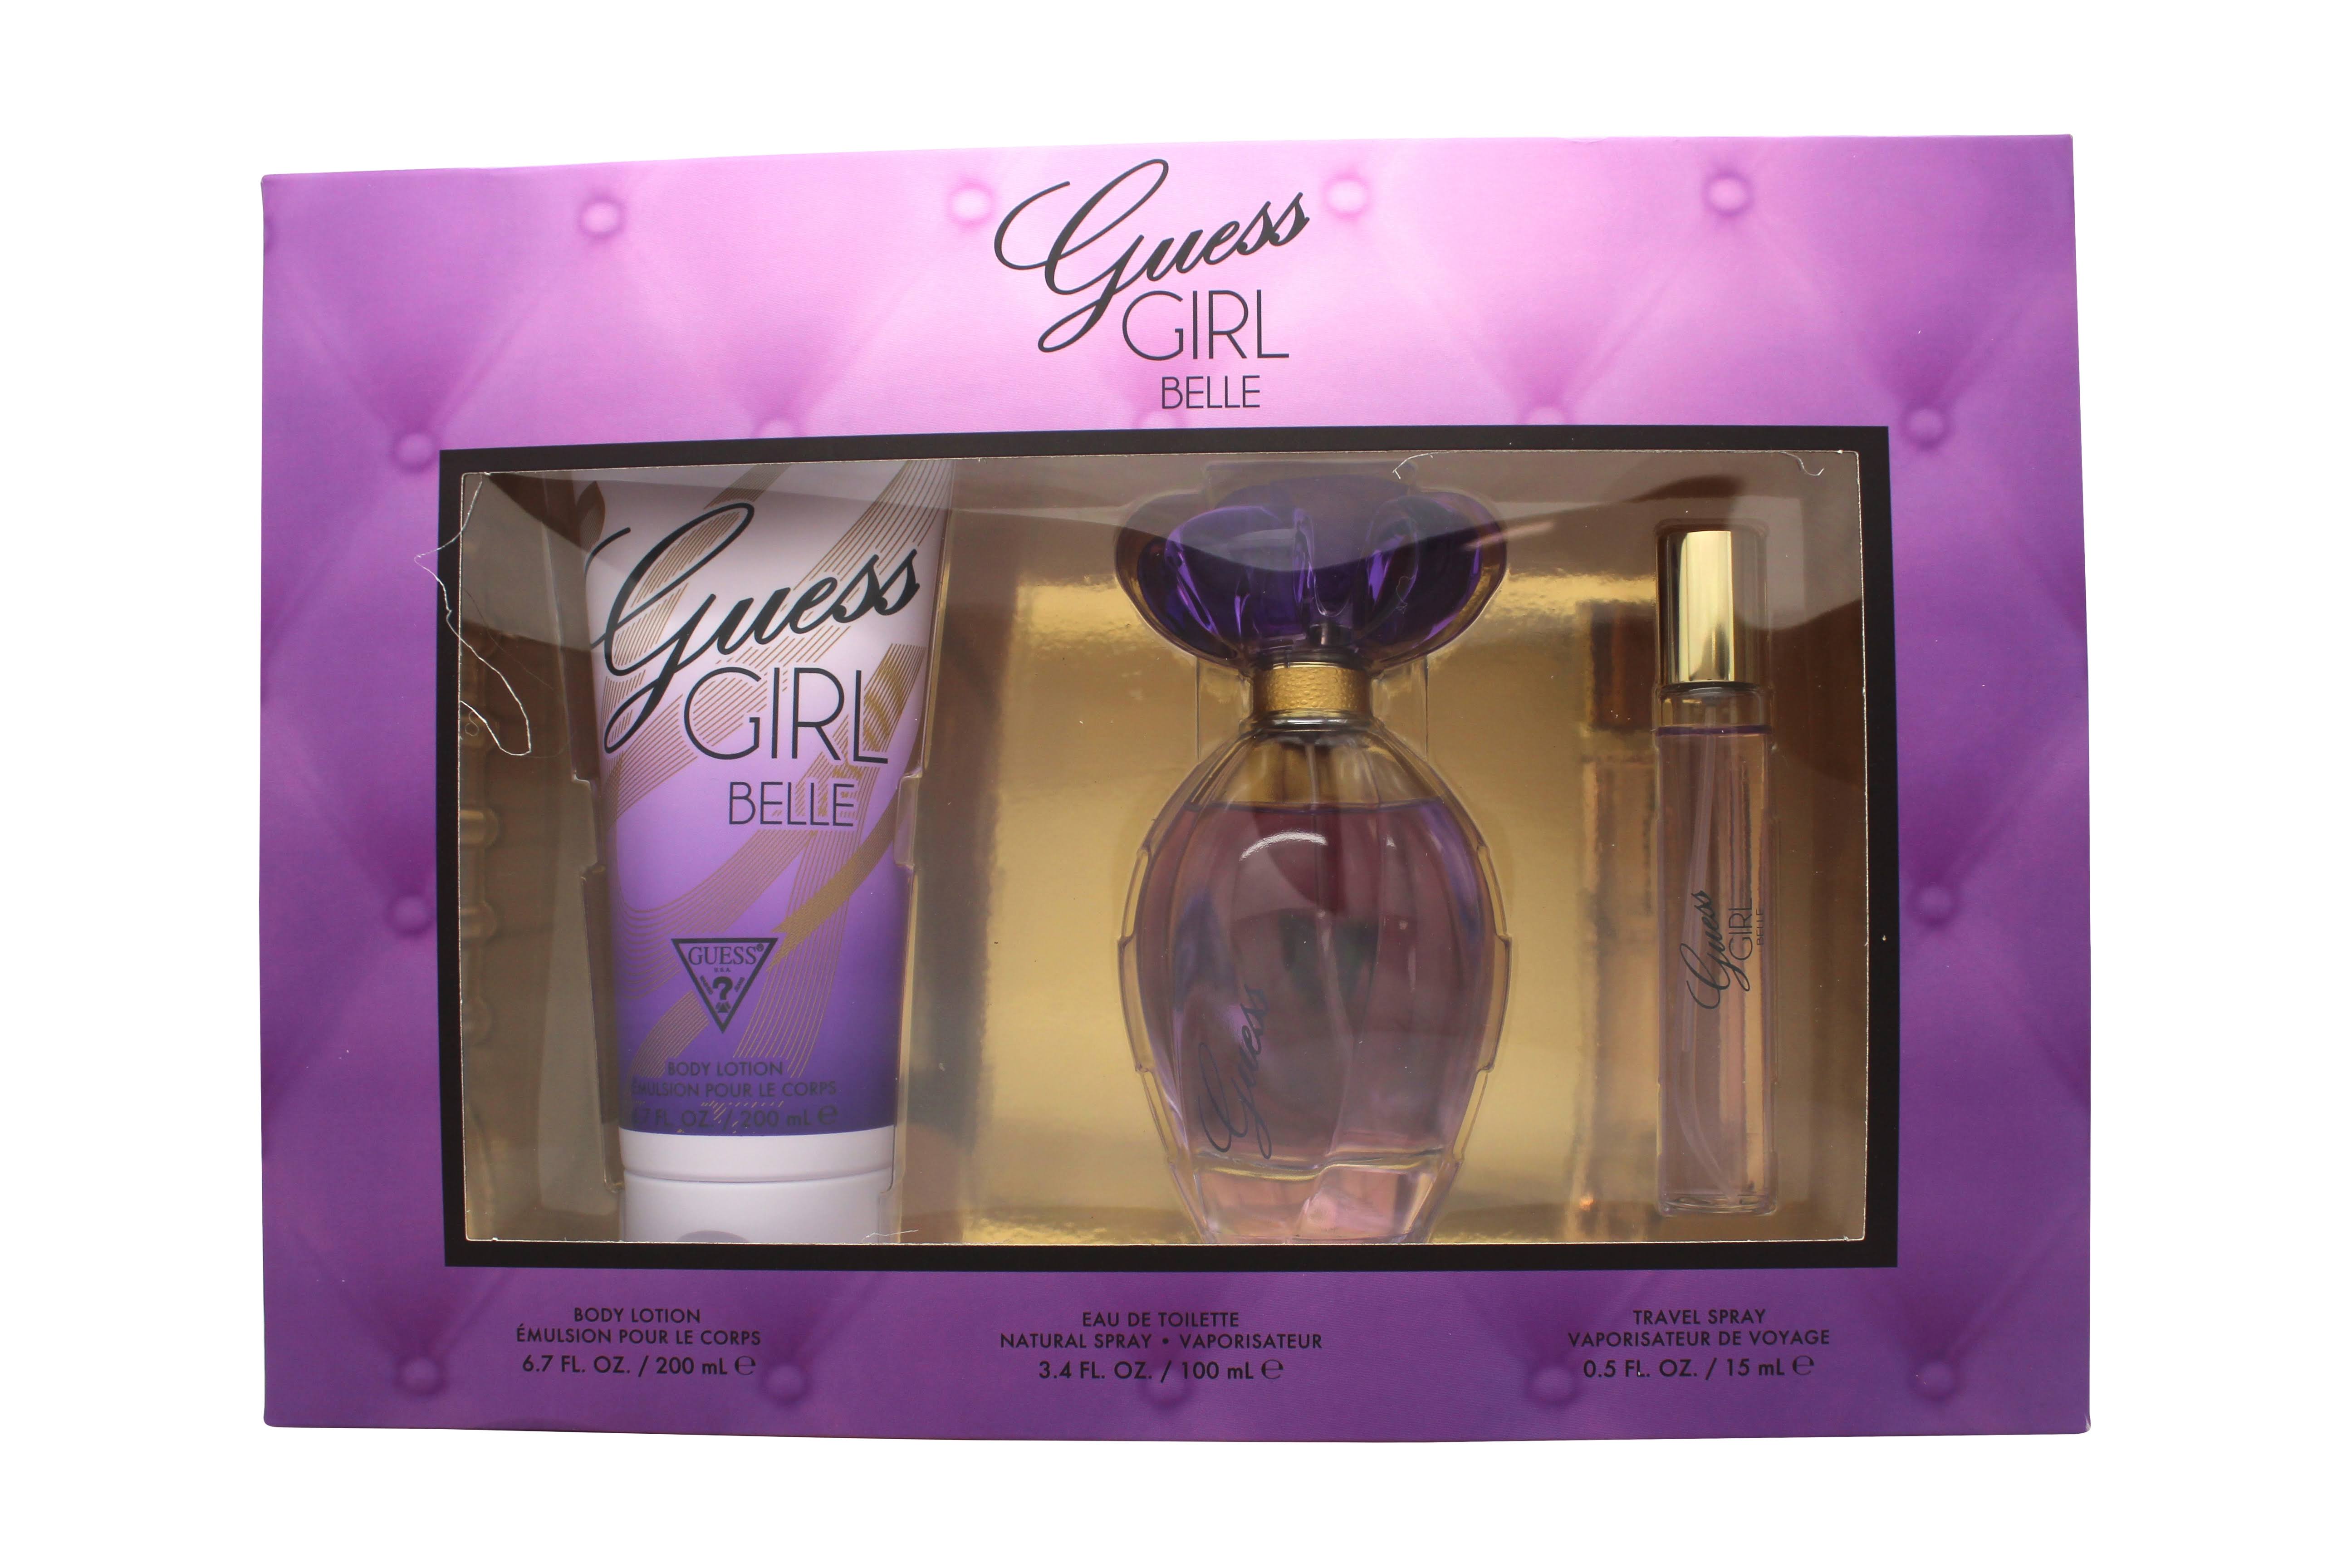 Guess - Girl Belle Eau de Toilette Spray 100ml Gift Set for Women